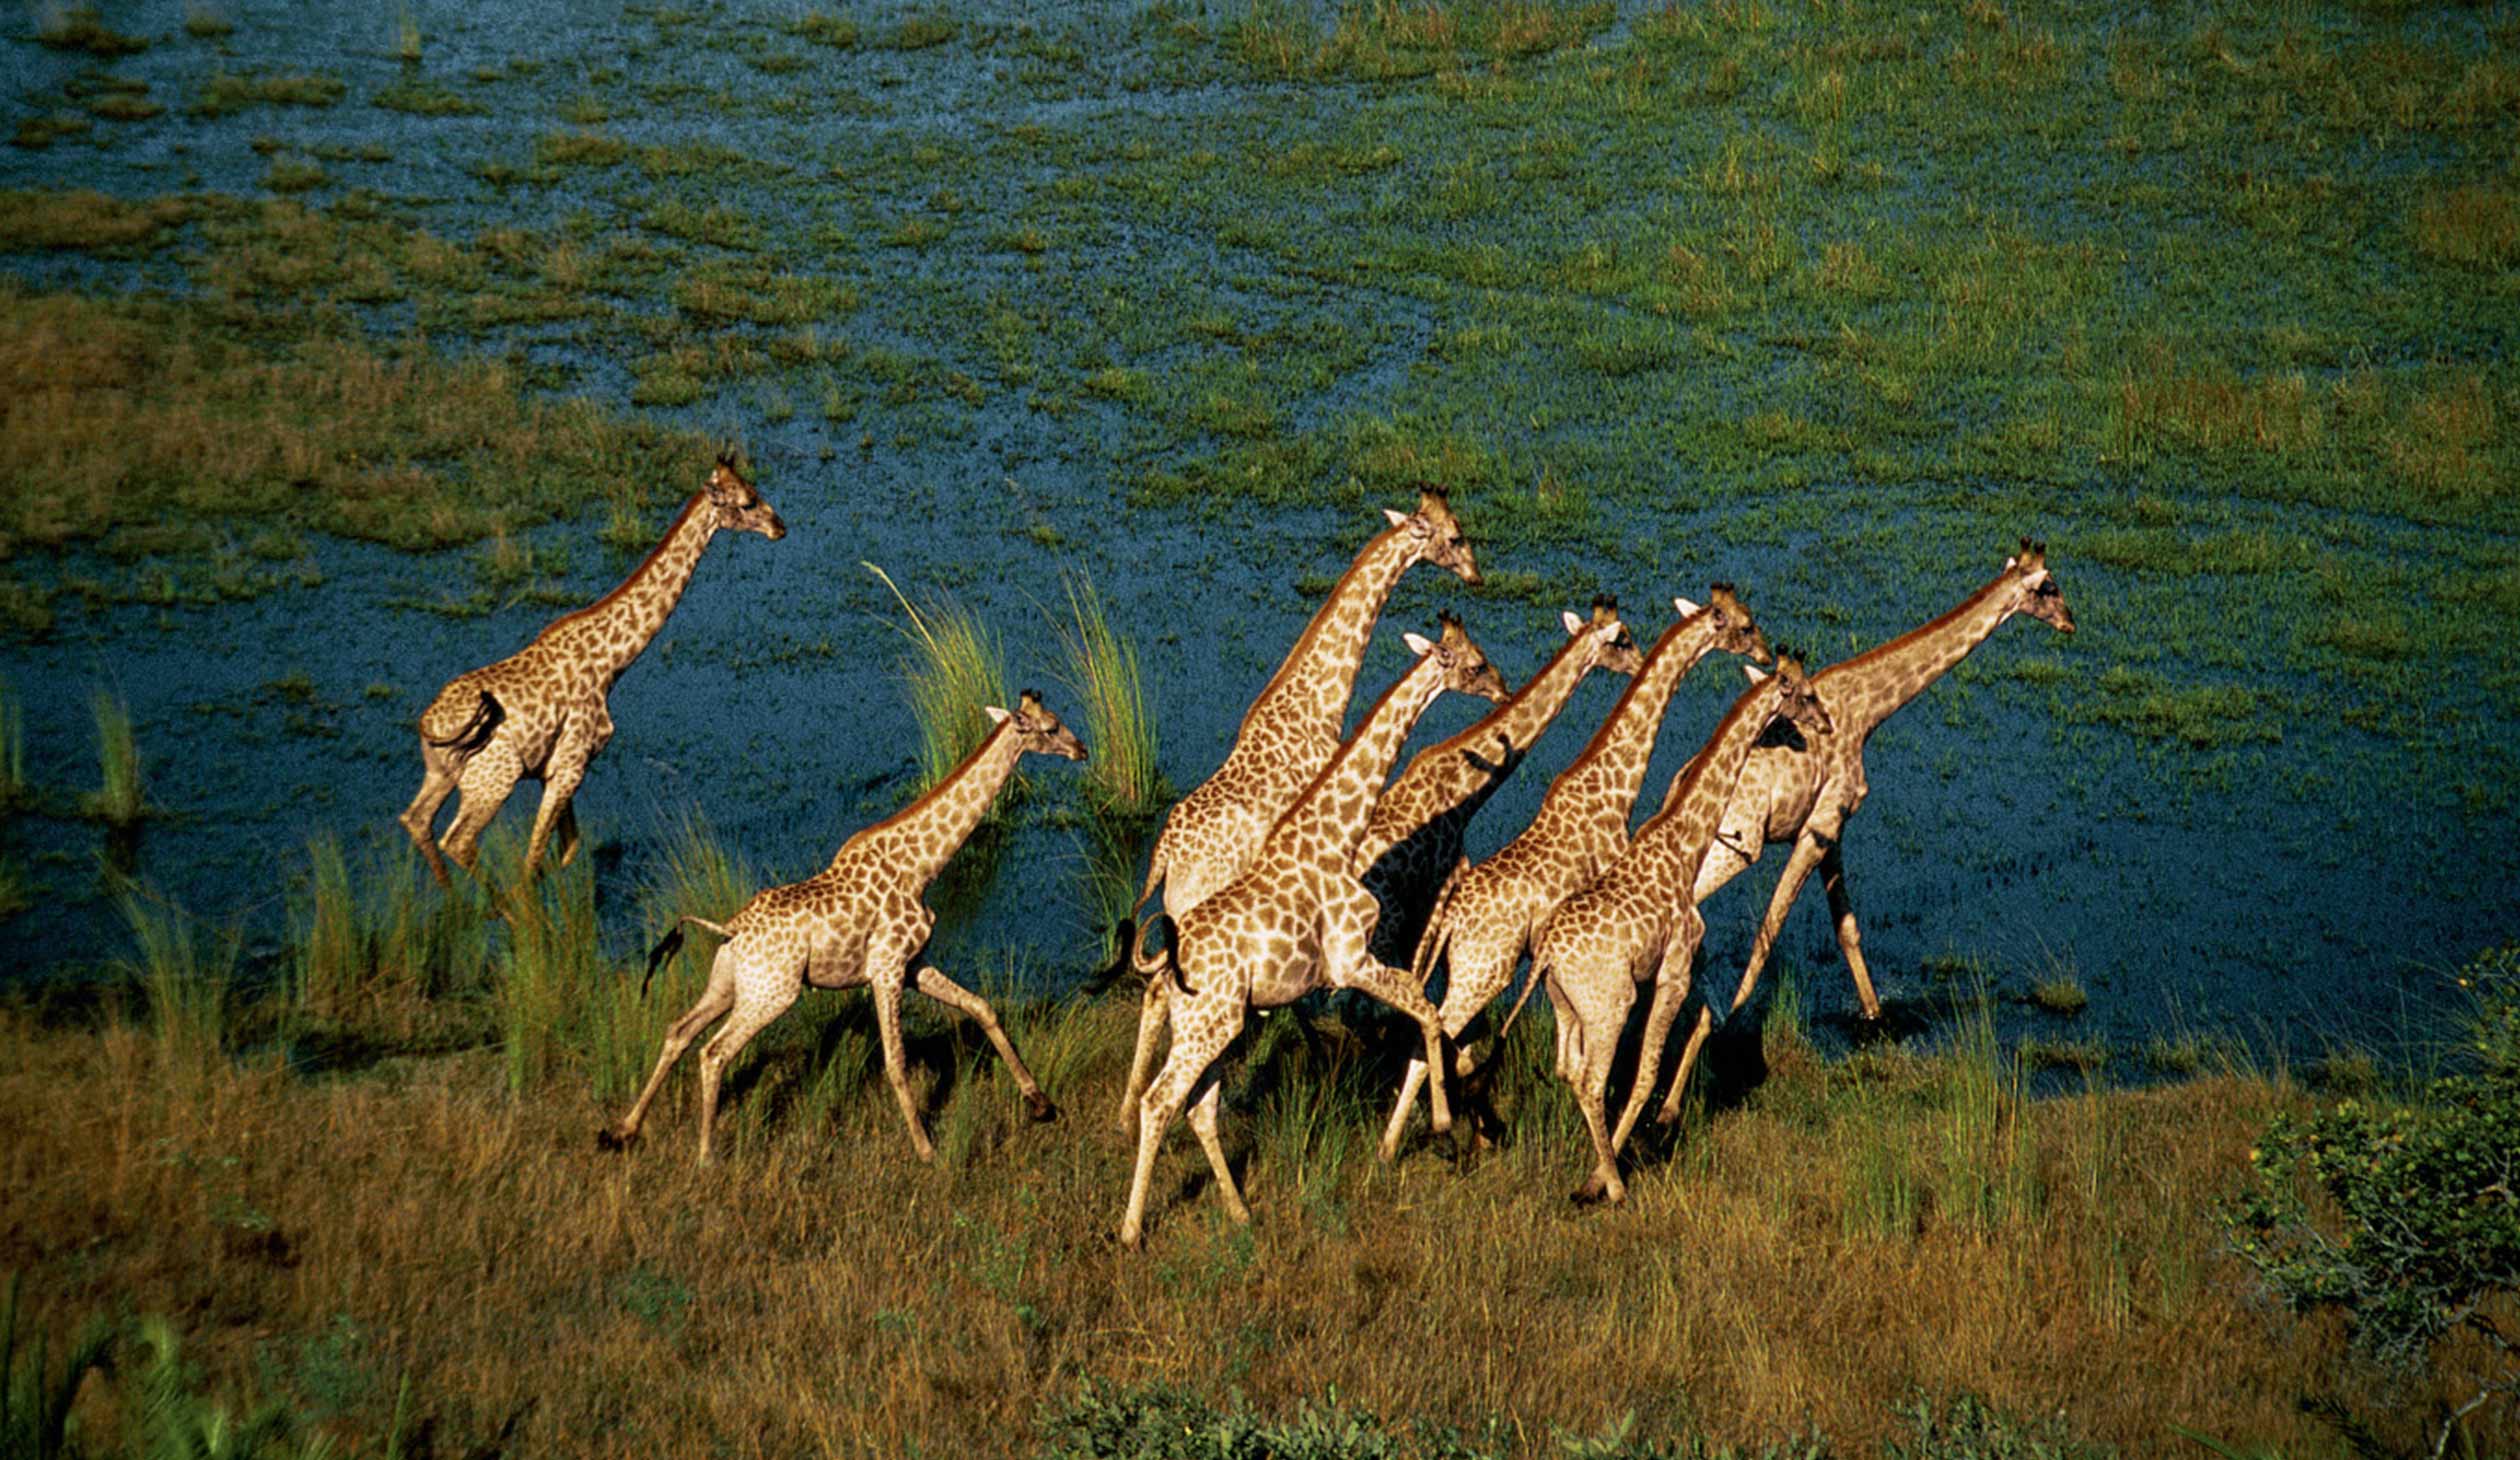 Discover animal. Животные Калахари. Сафари в Африке. Дискавери про животных.